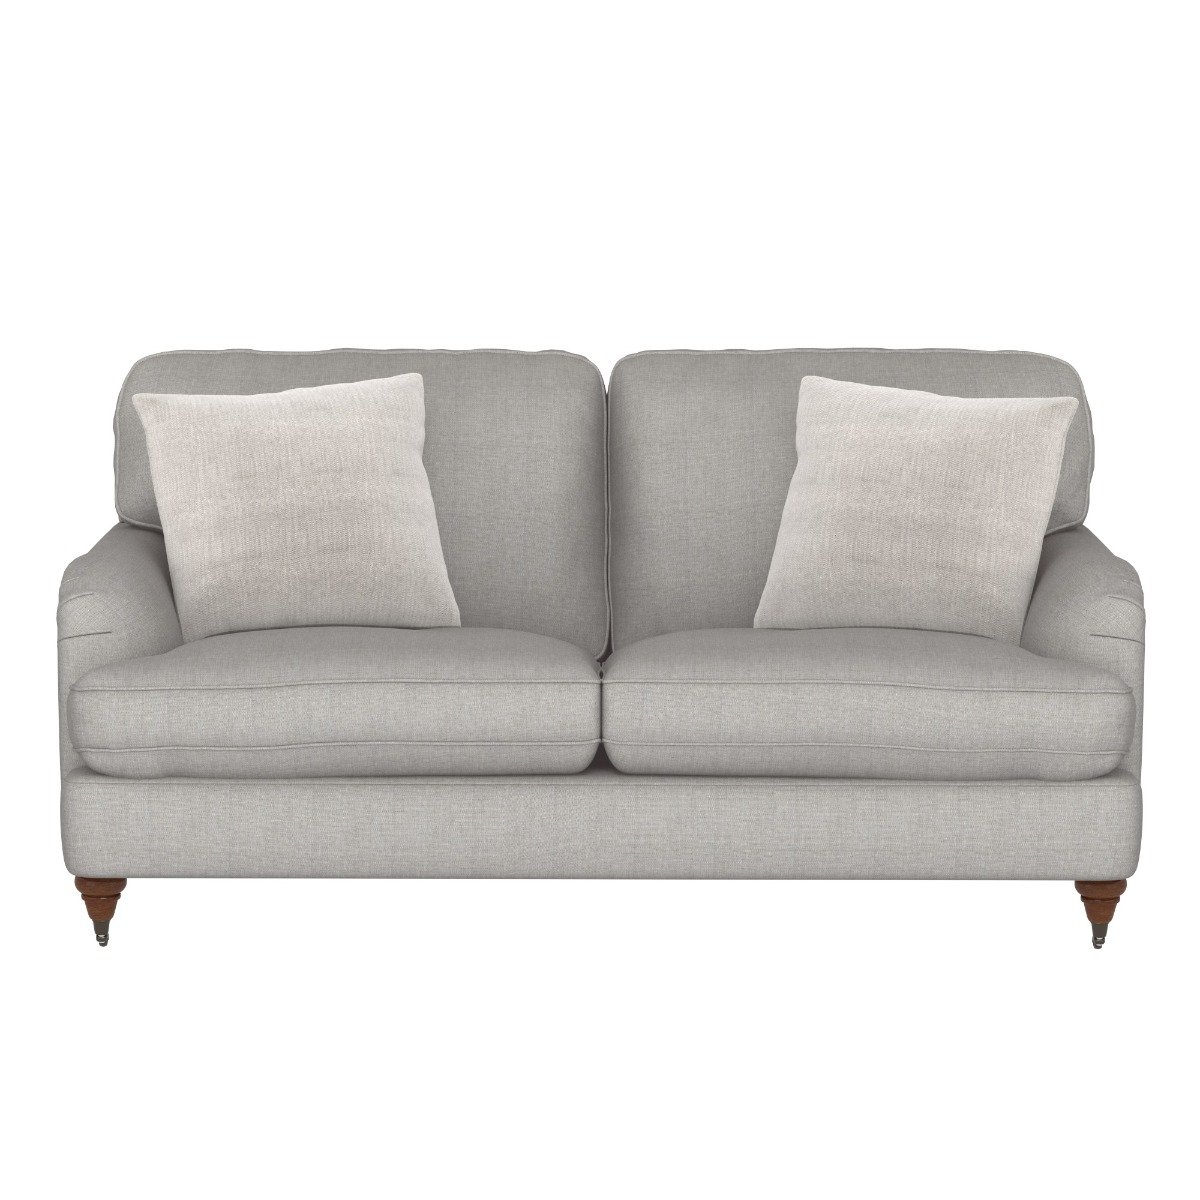 Sloane Medium Sofa, Grey Fabric | Barker & Stonehouse